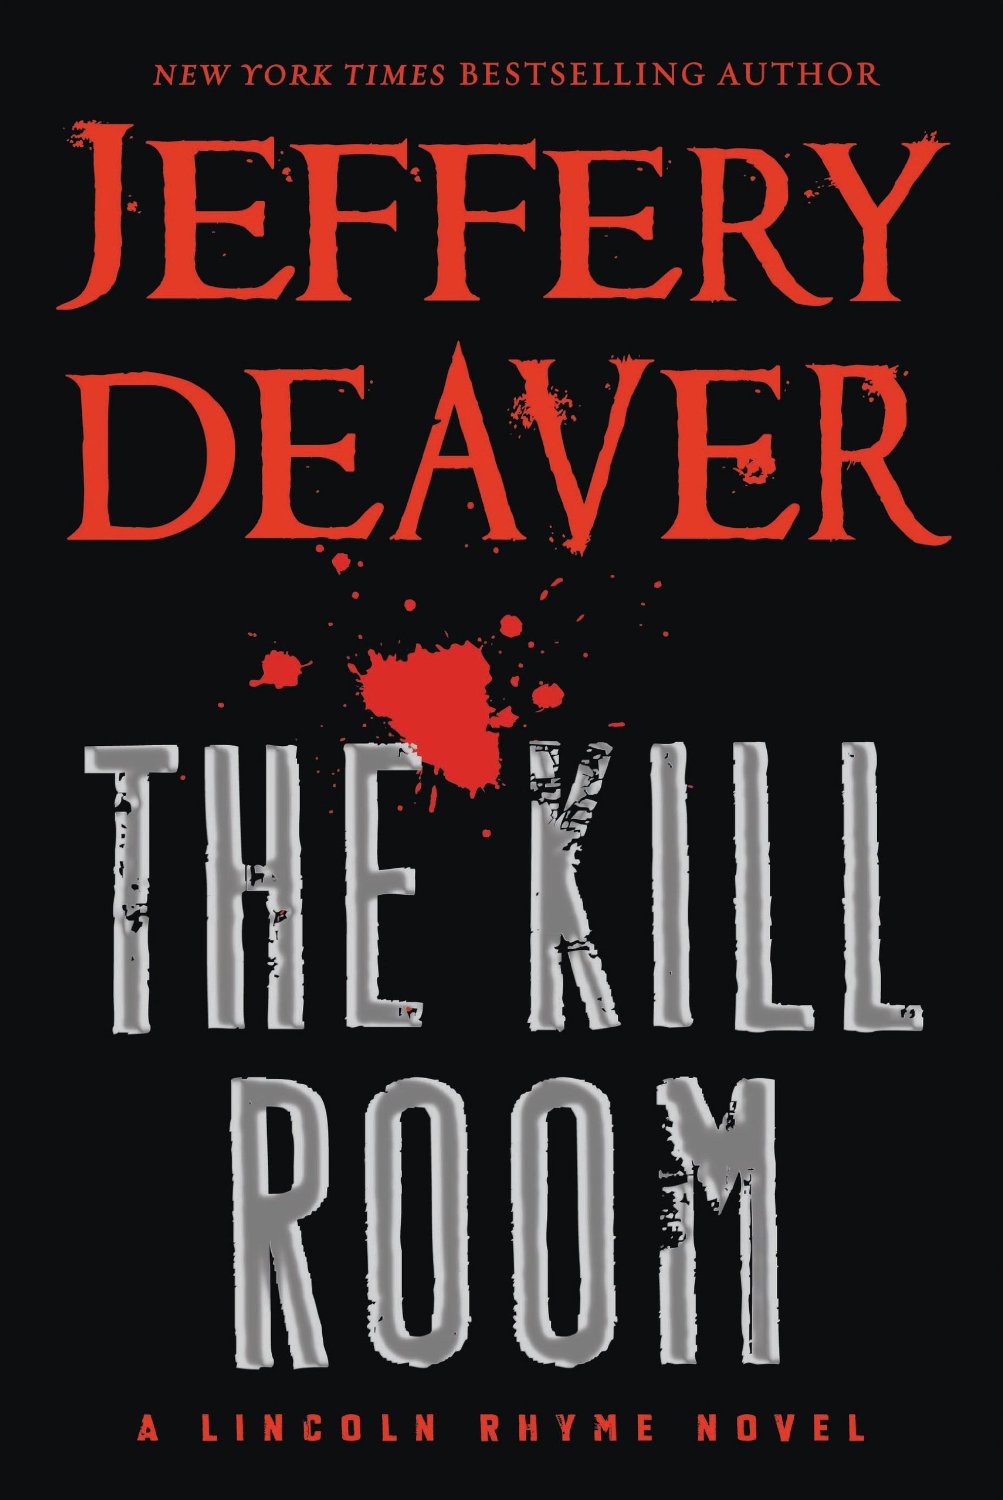 Book Reviews: The Kill room